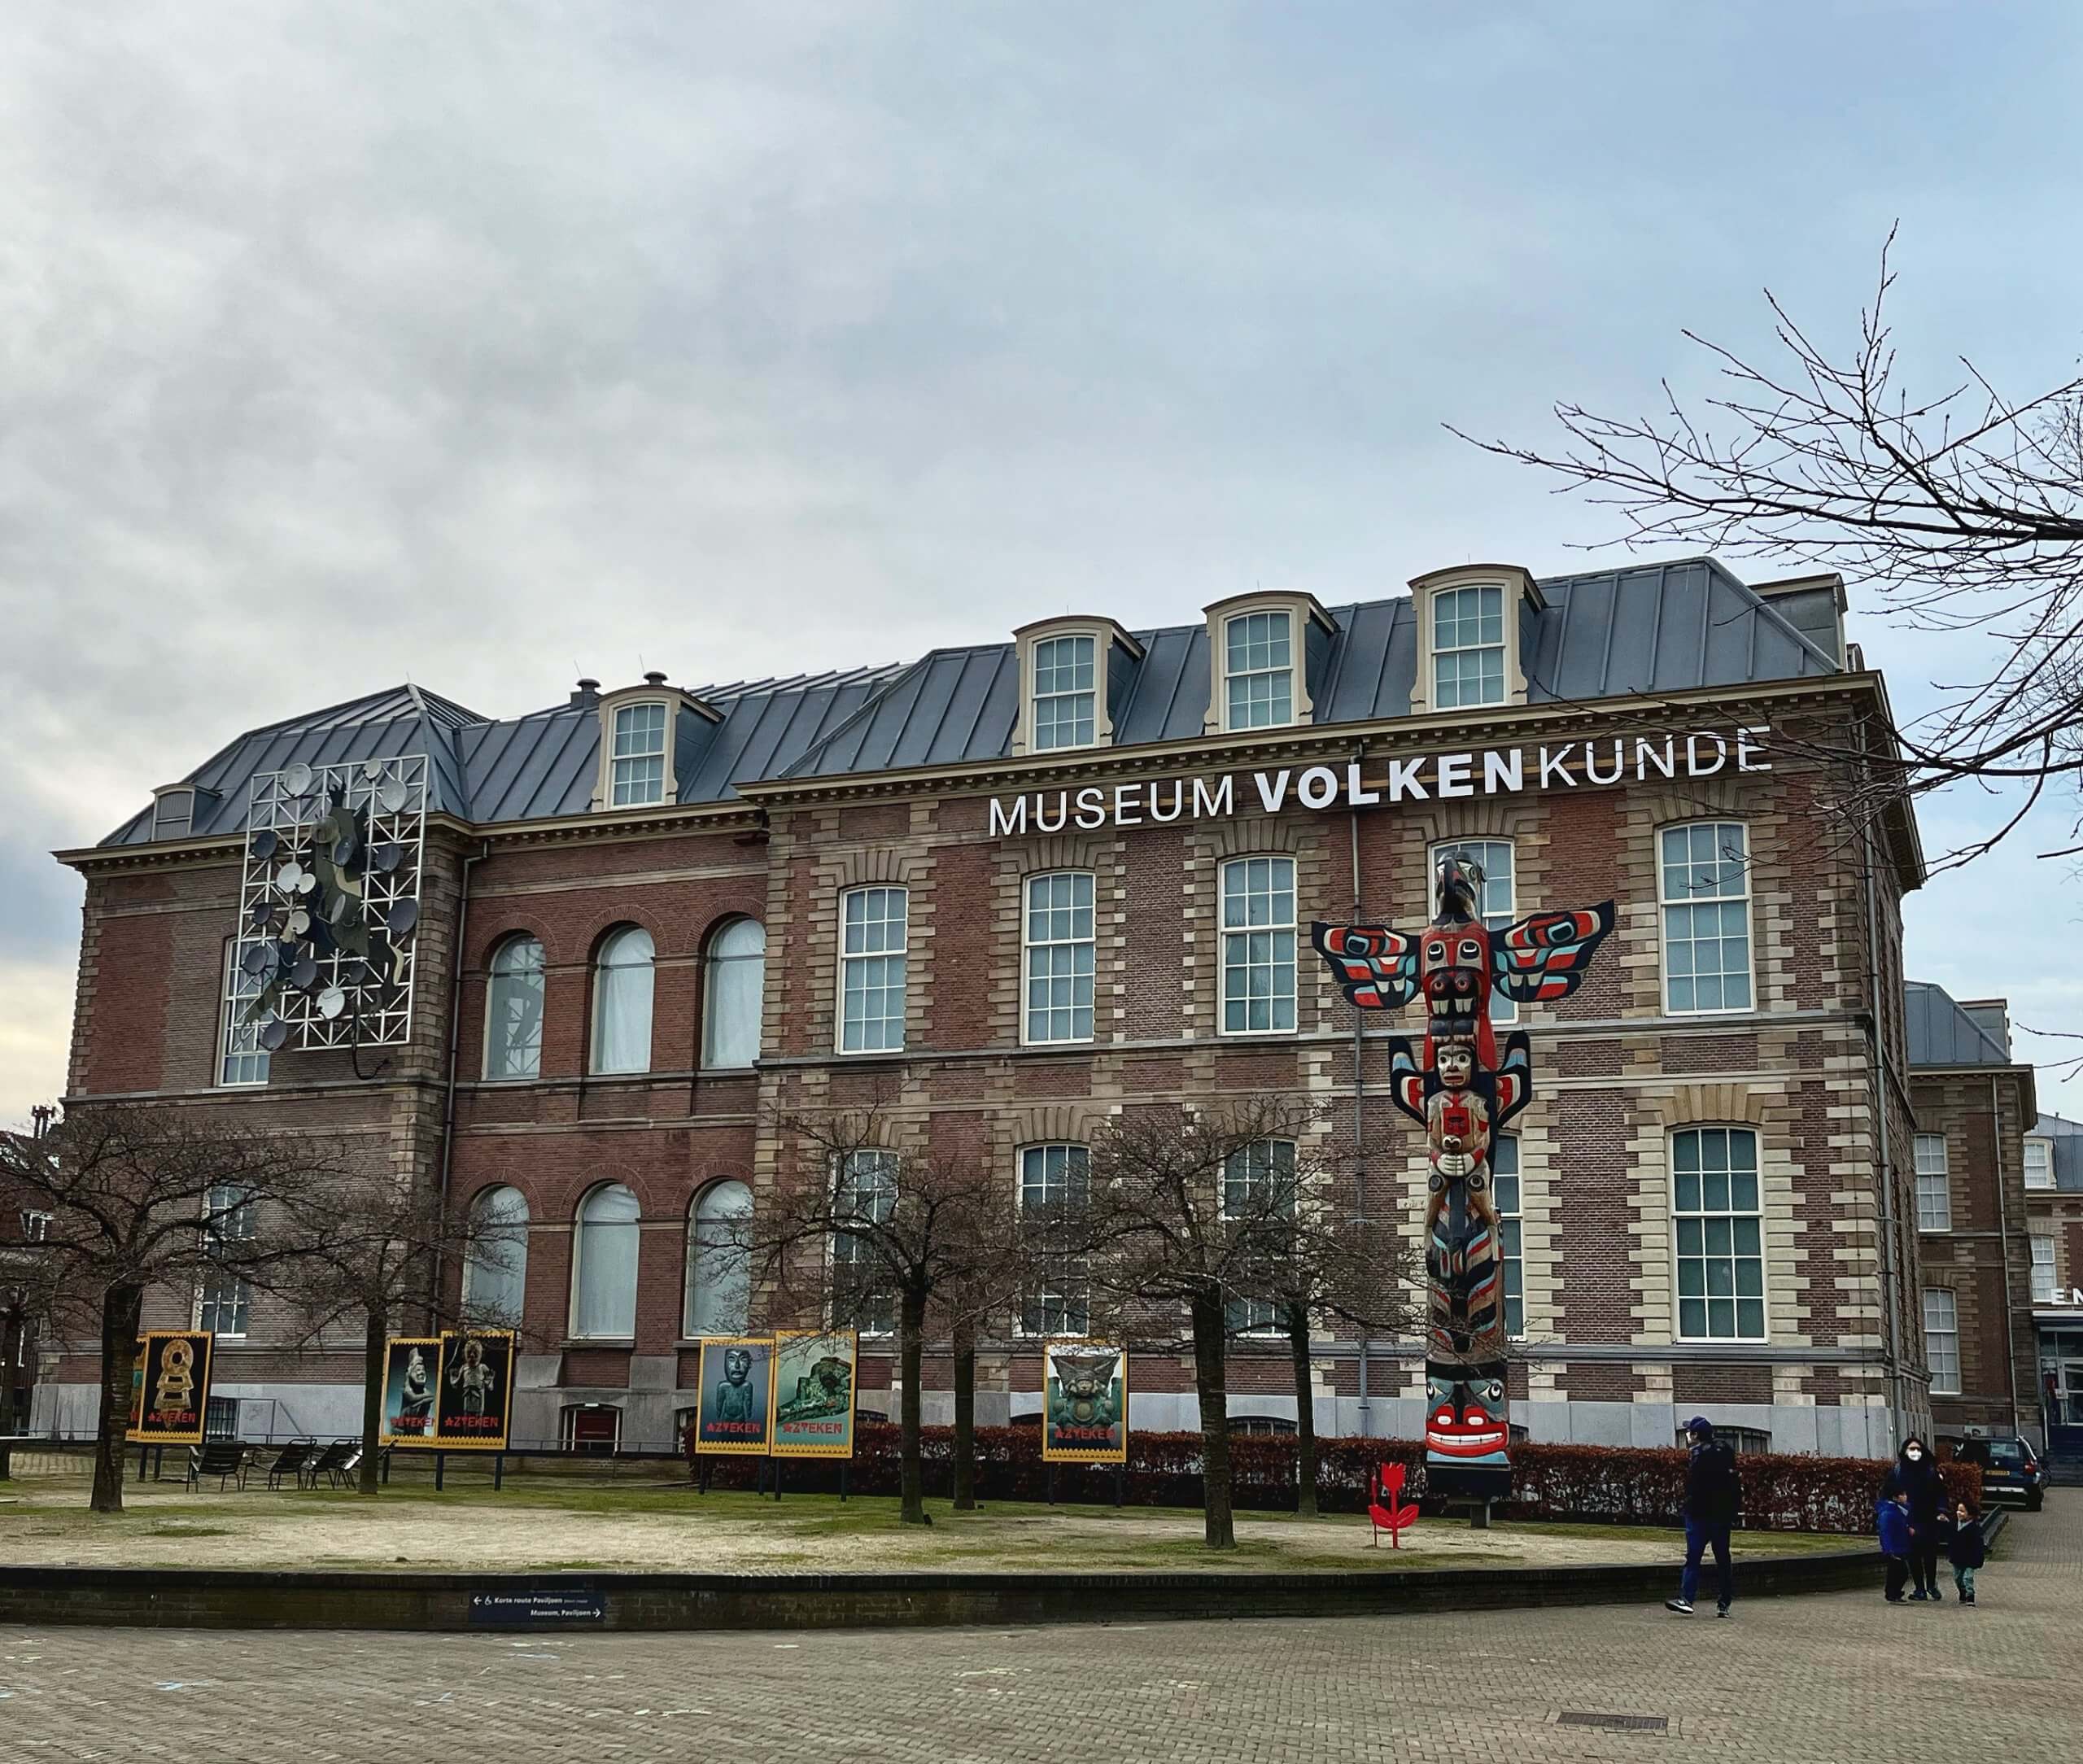 Leiden museum volkenkunde